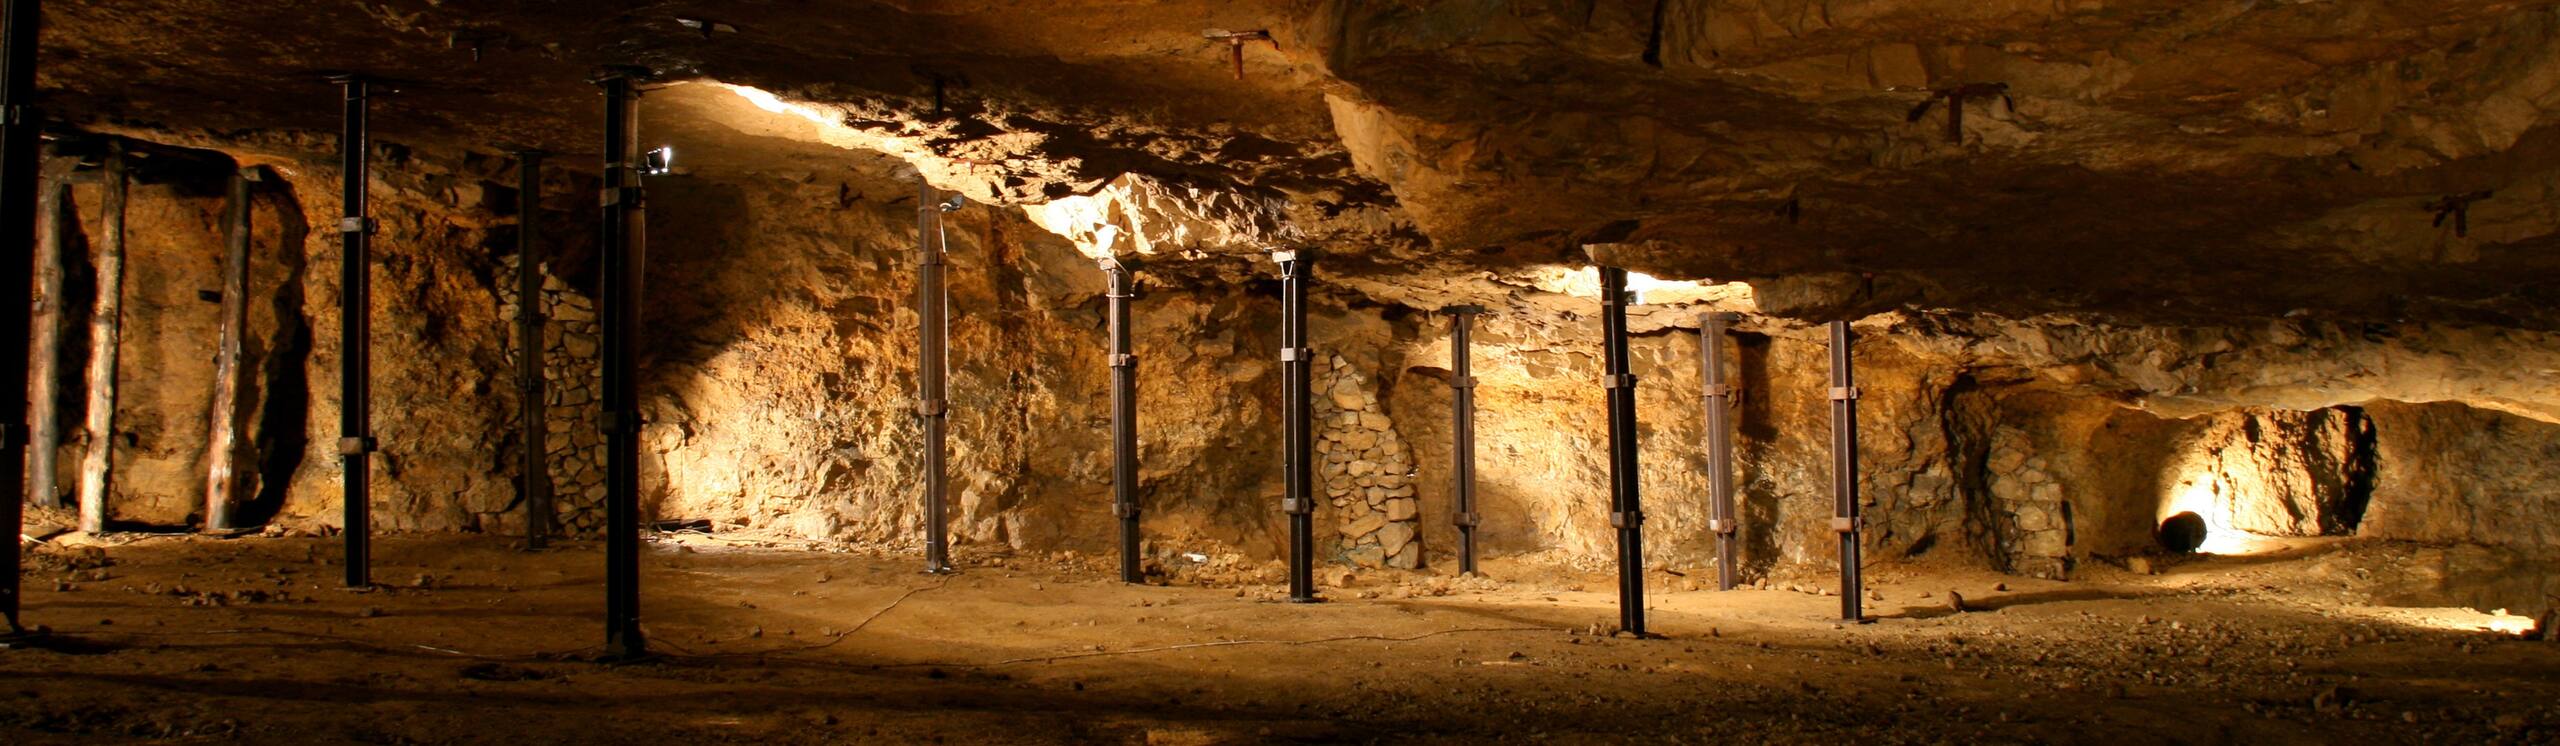 Tarnowskie Góry Lead-Silver-Zinc Mine and its Underground Water Management System